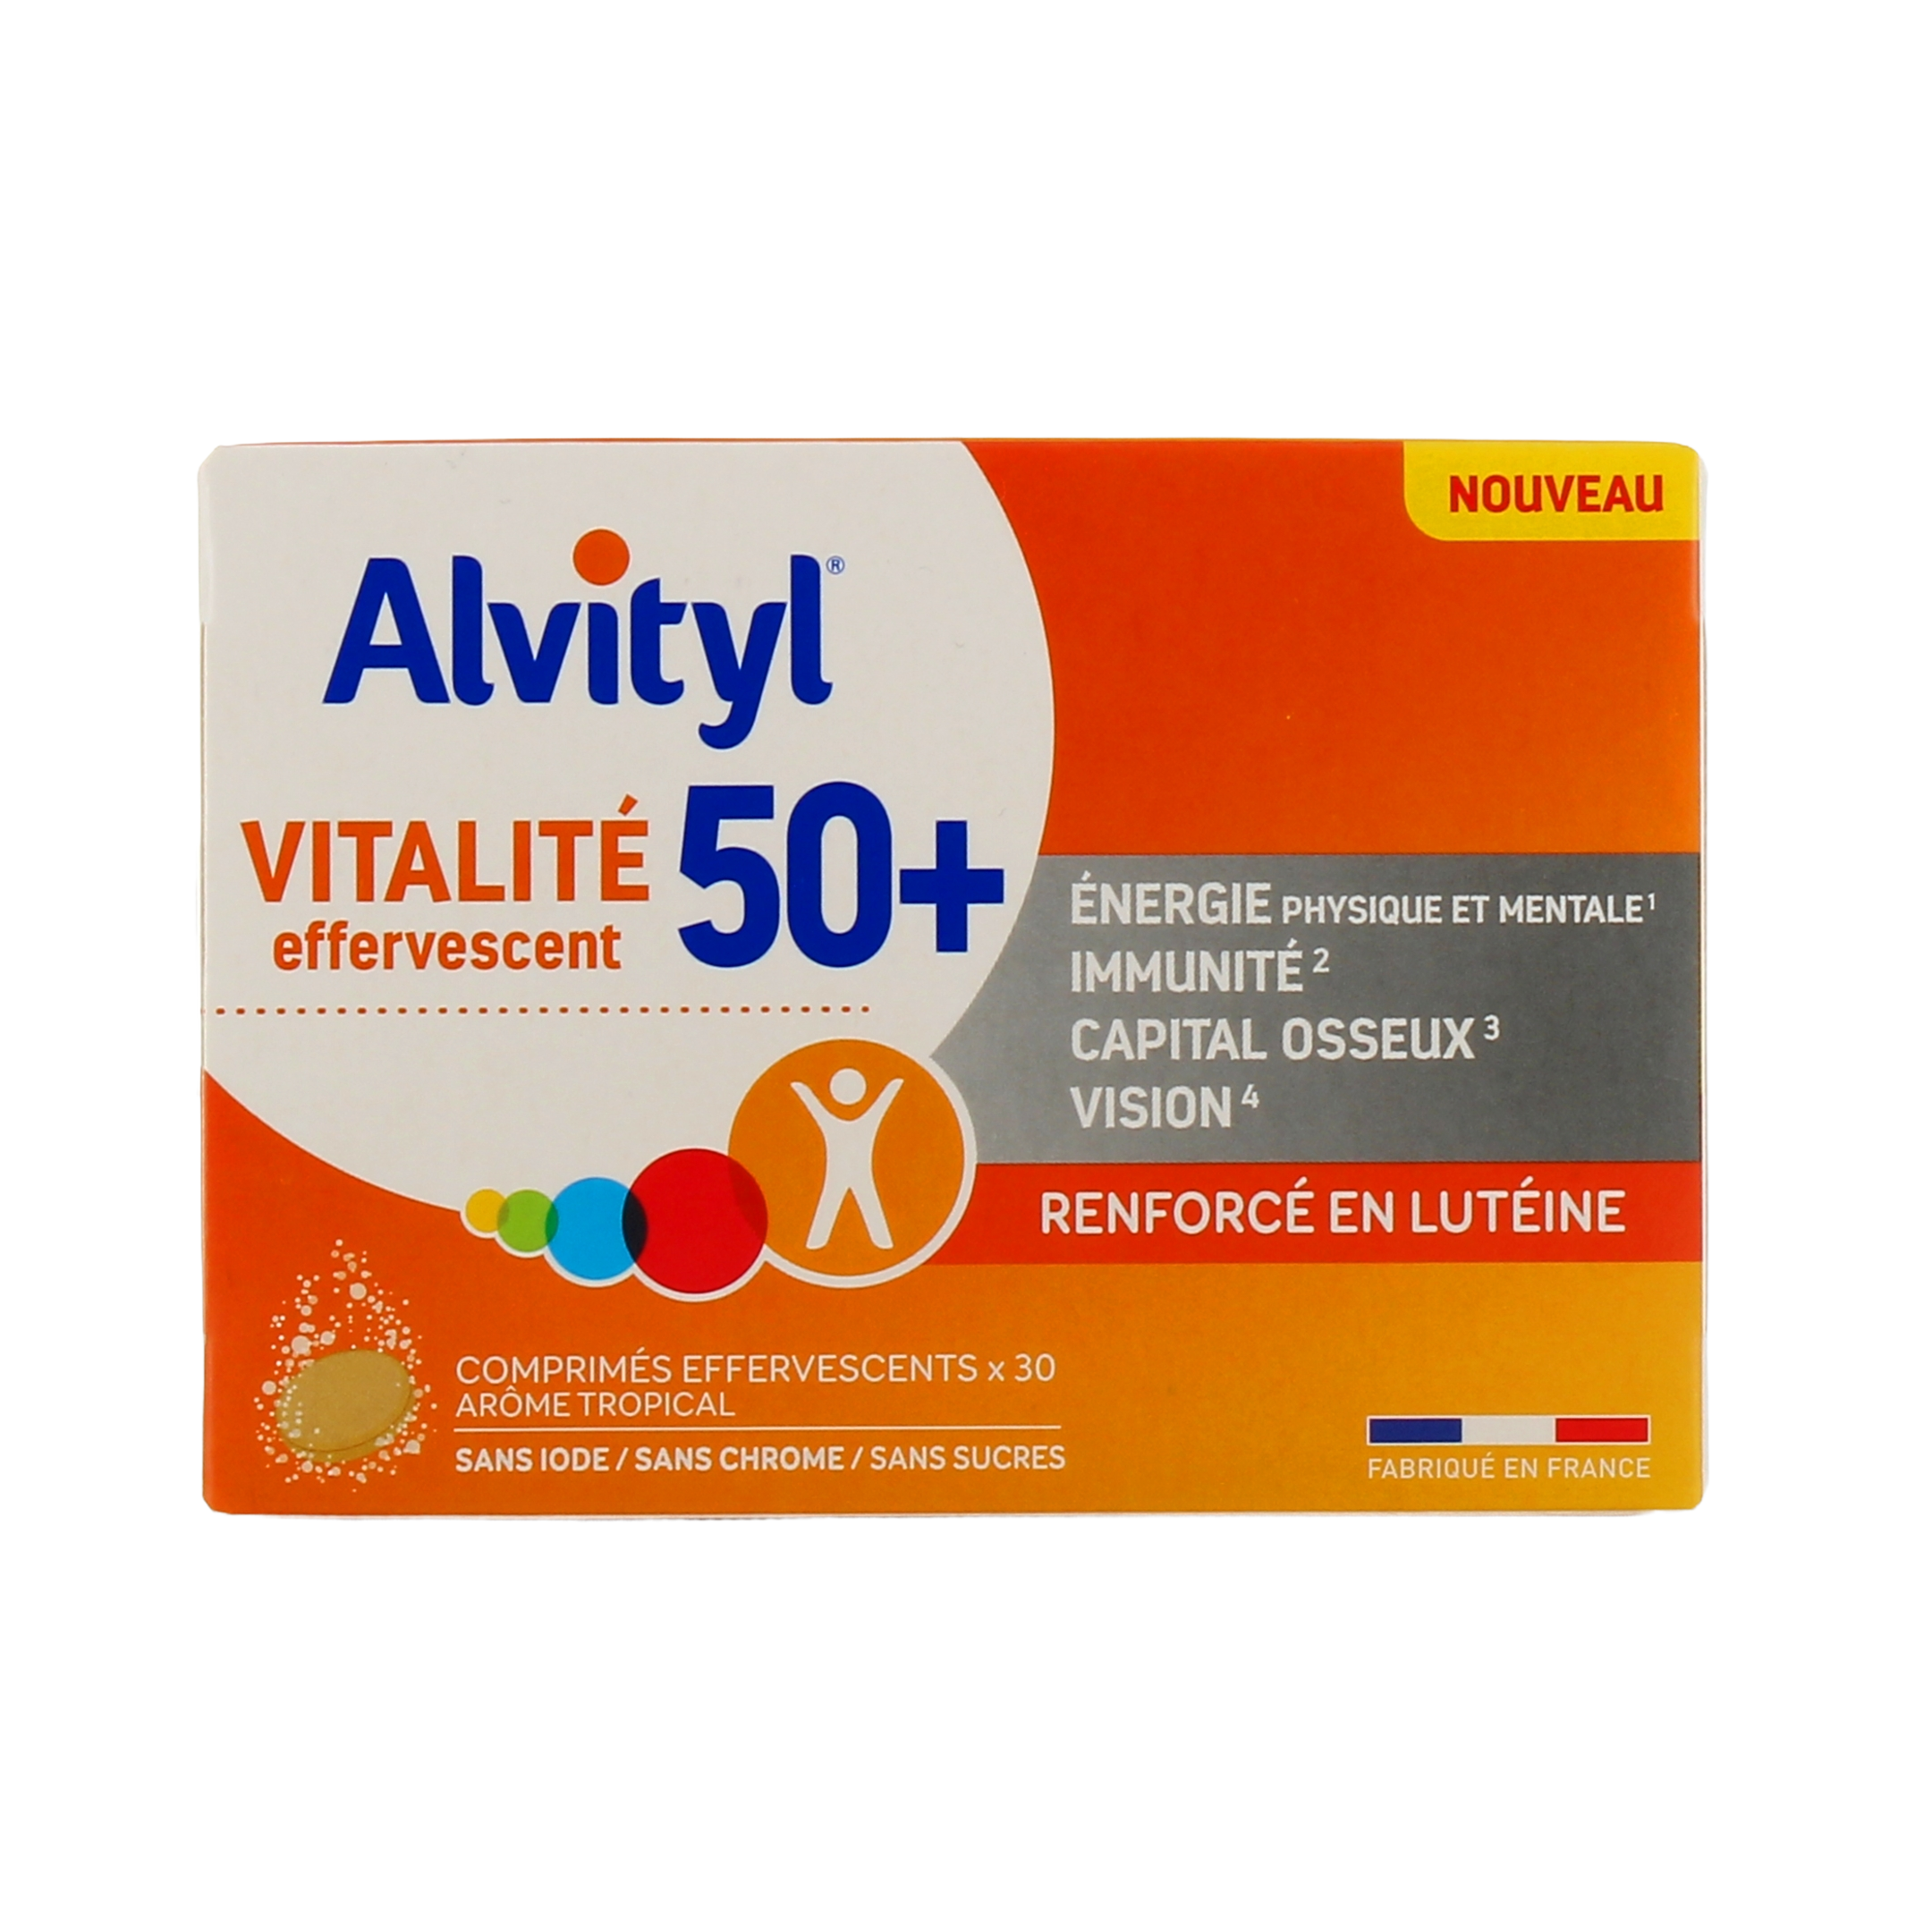 ALVITYL VITALITE multivitamines Solution Buvable 150ML - Bichet